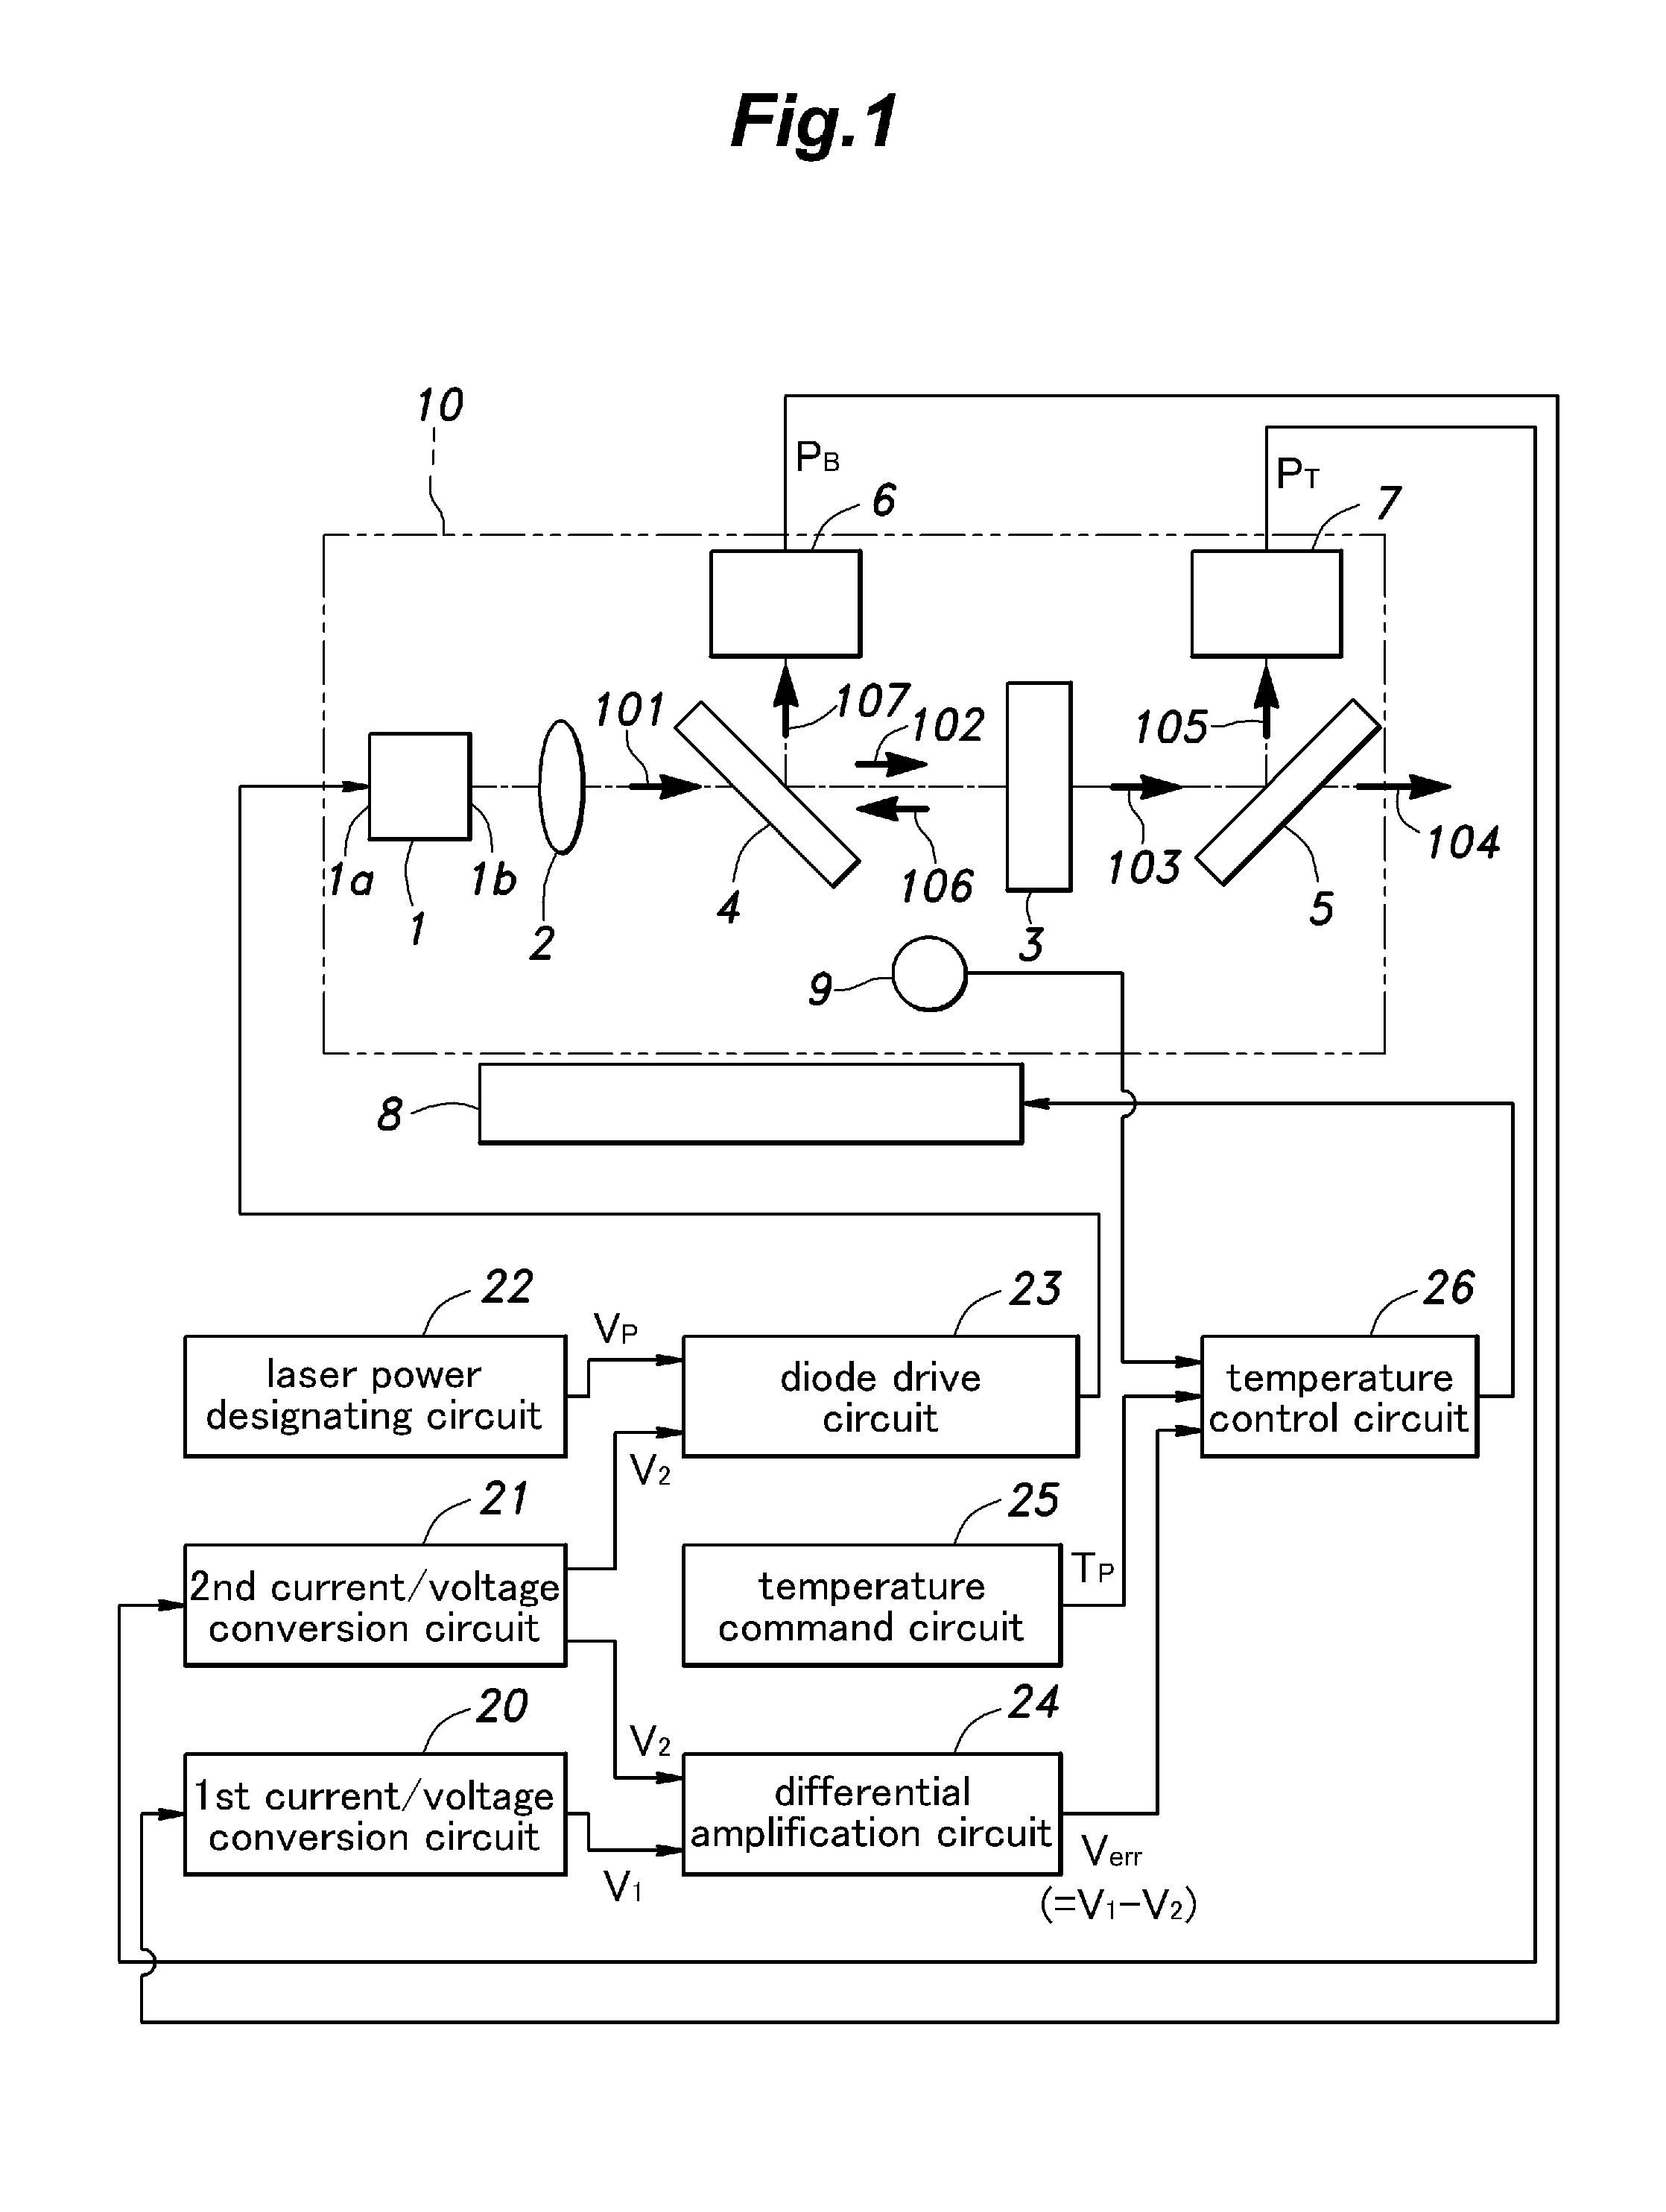 Single longitudinal mode diode laser module with external resonator